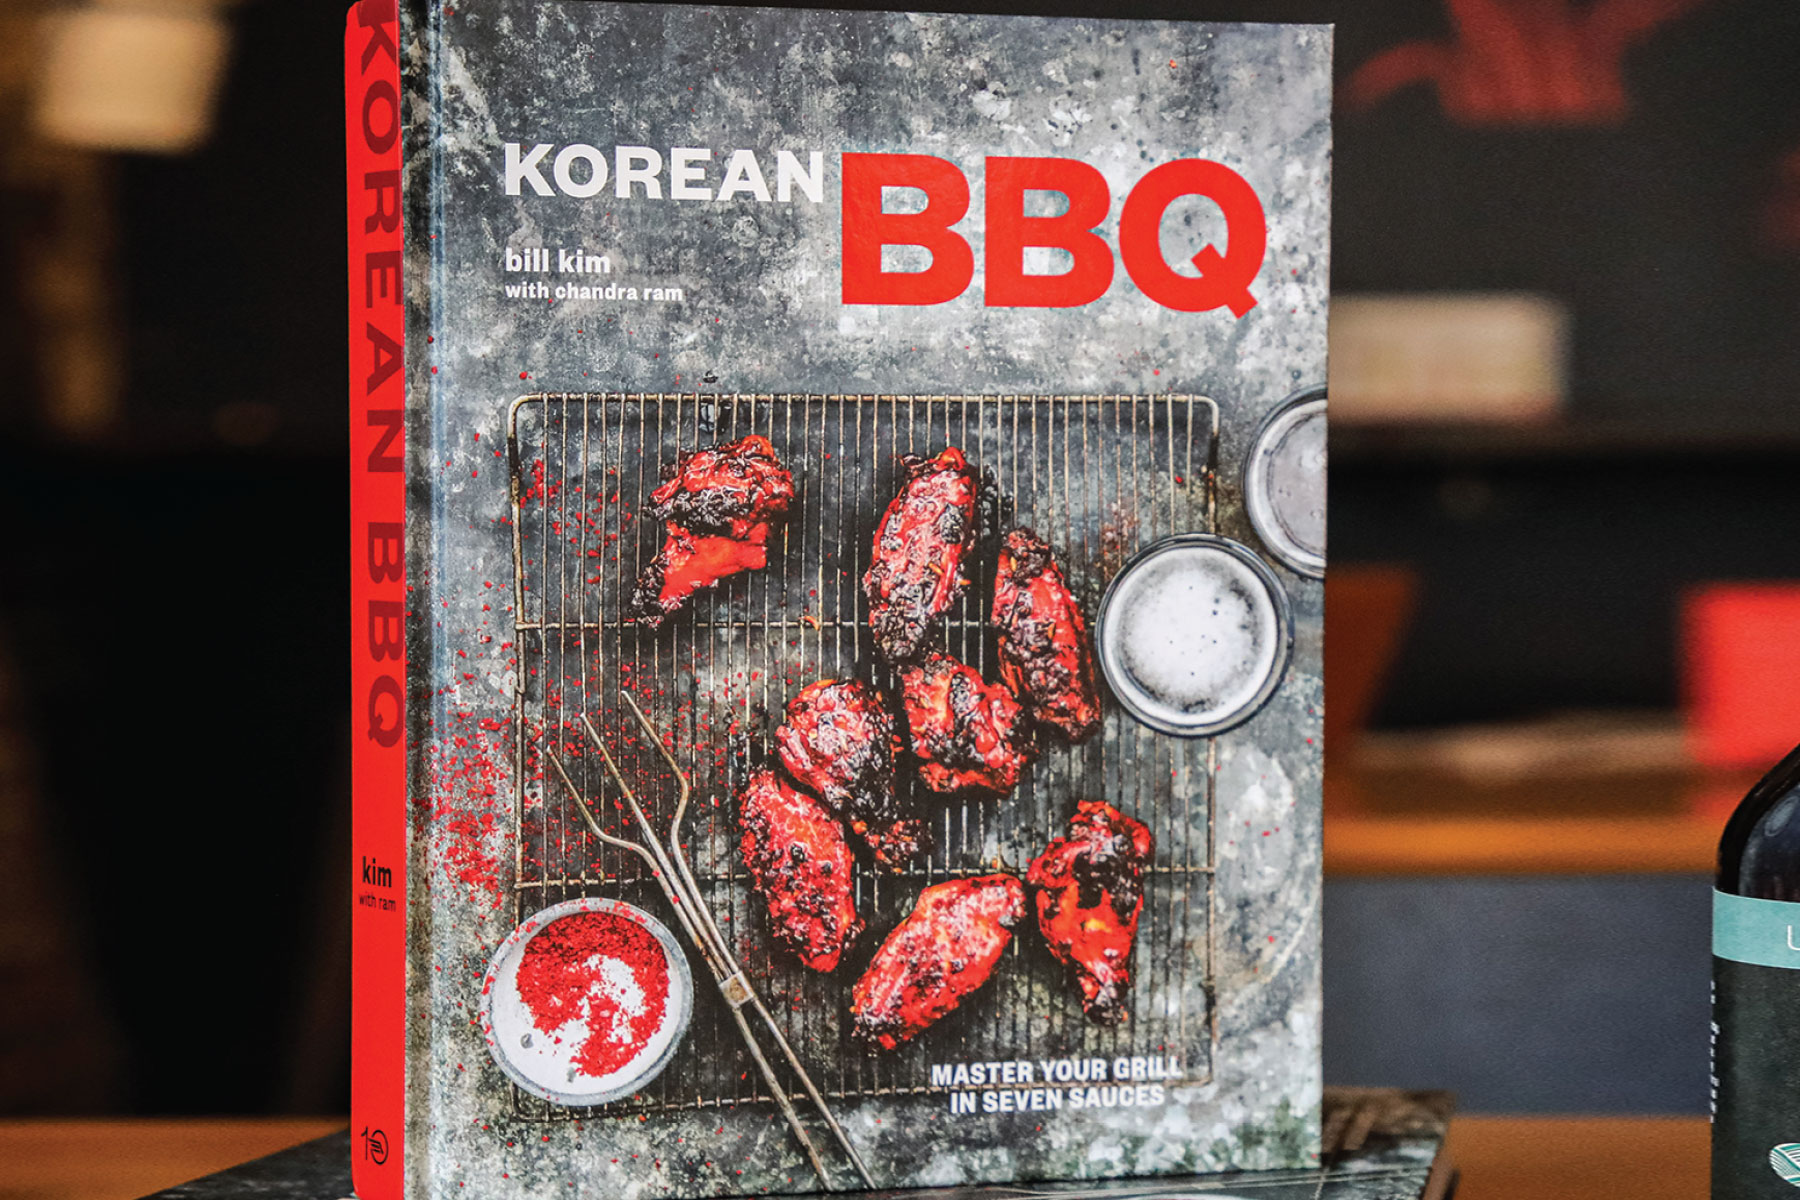 Korean BBQ by Chef Bill Kim